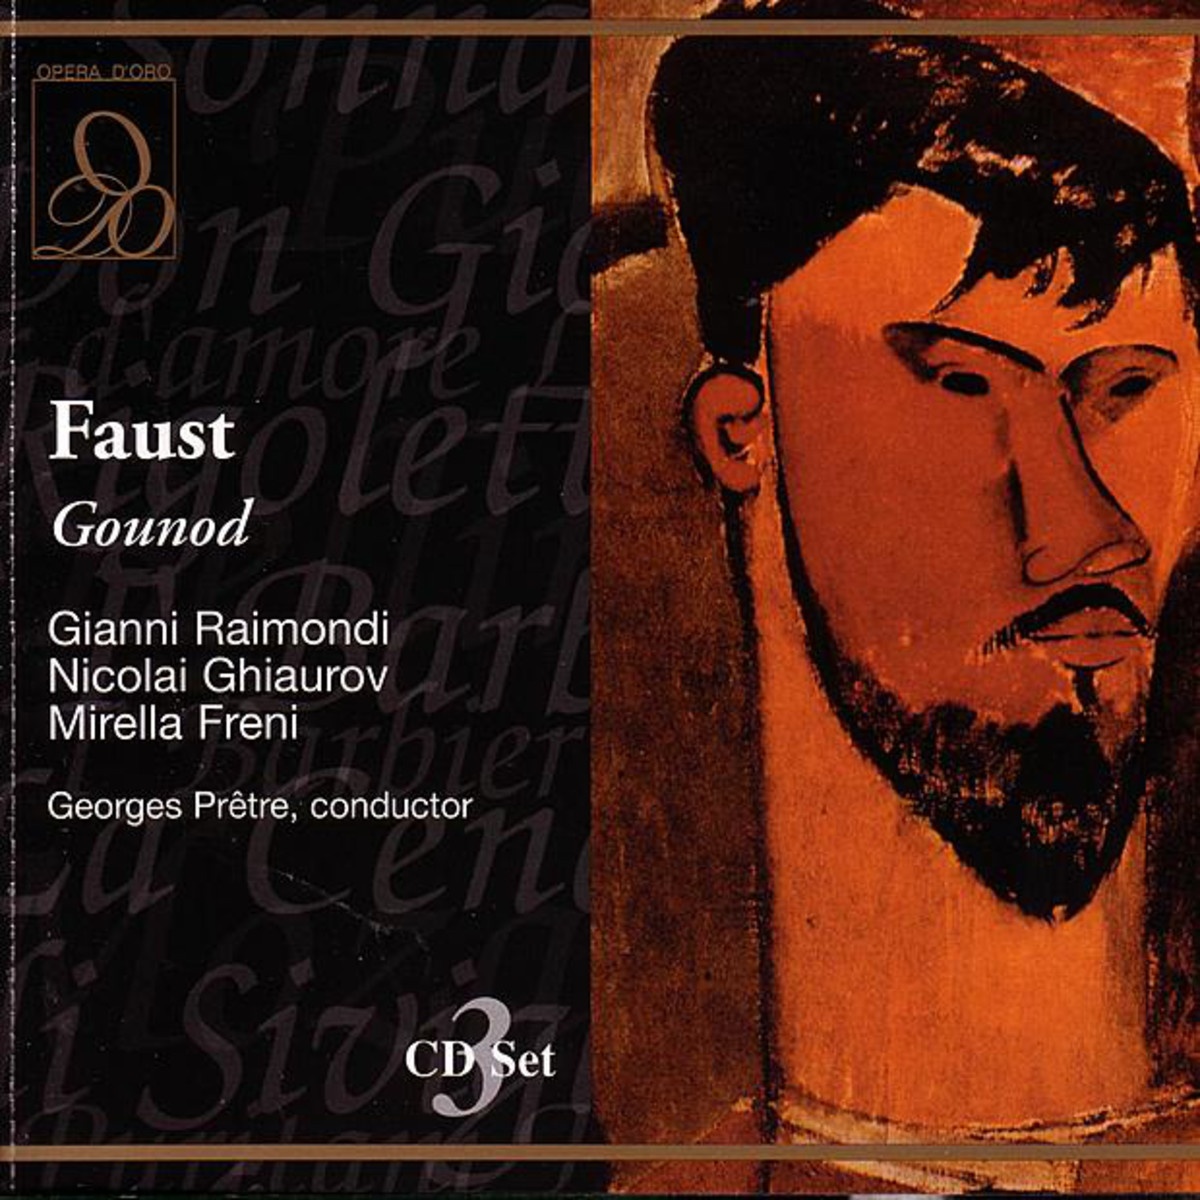 Faust (1986 Digital Remaster), Ballet Music: Variations du Miroir (Allegretto)